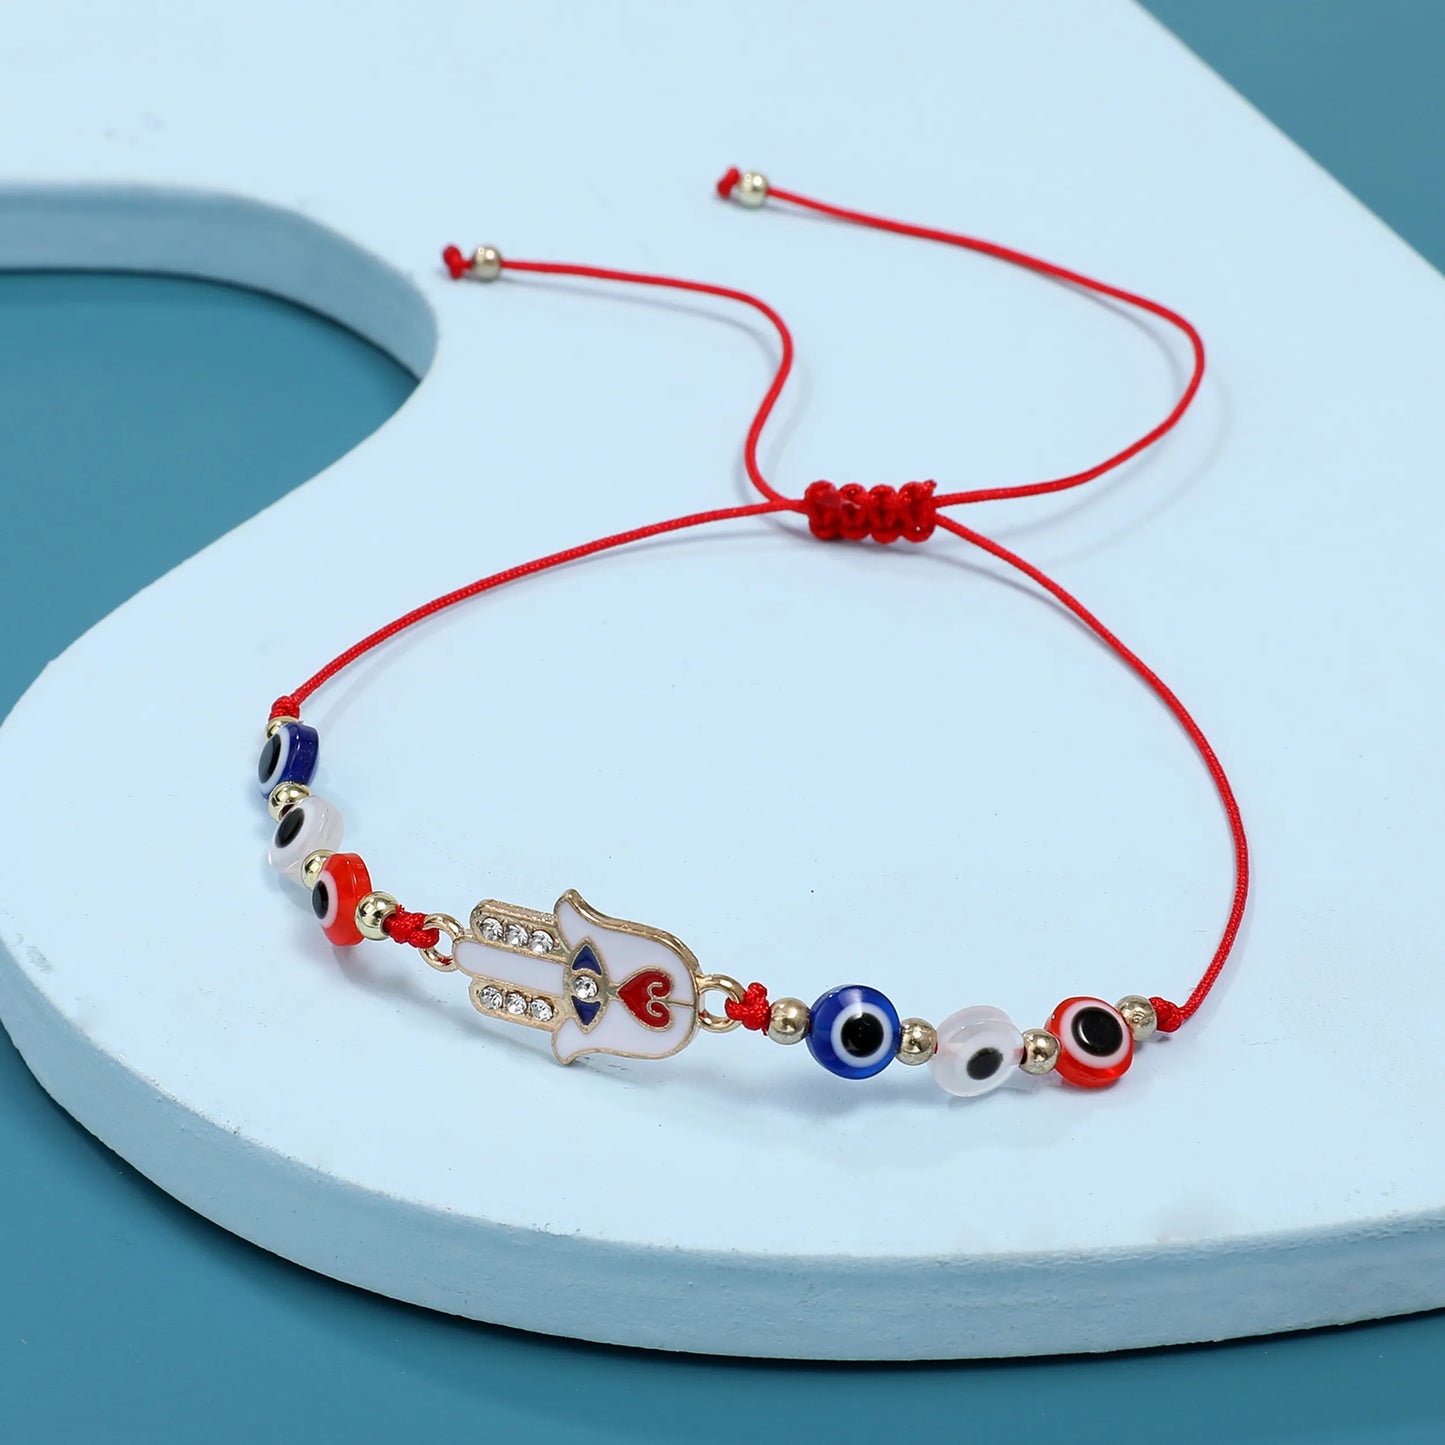 12pcs Evil Eye Fatima Hand Pendant Bracelet Turkish Beads Adjustable Fashion Small Fresh Handmade Women Jewelry Accessories